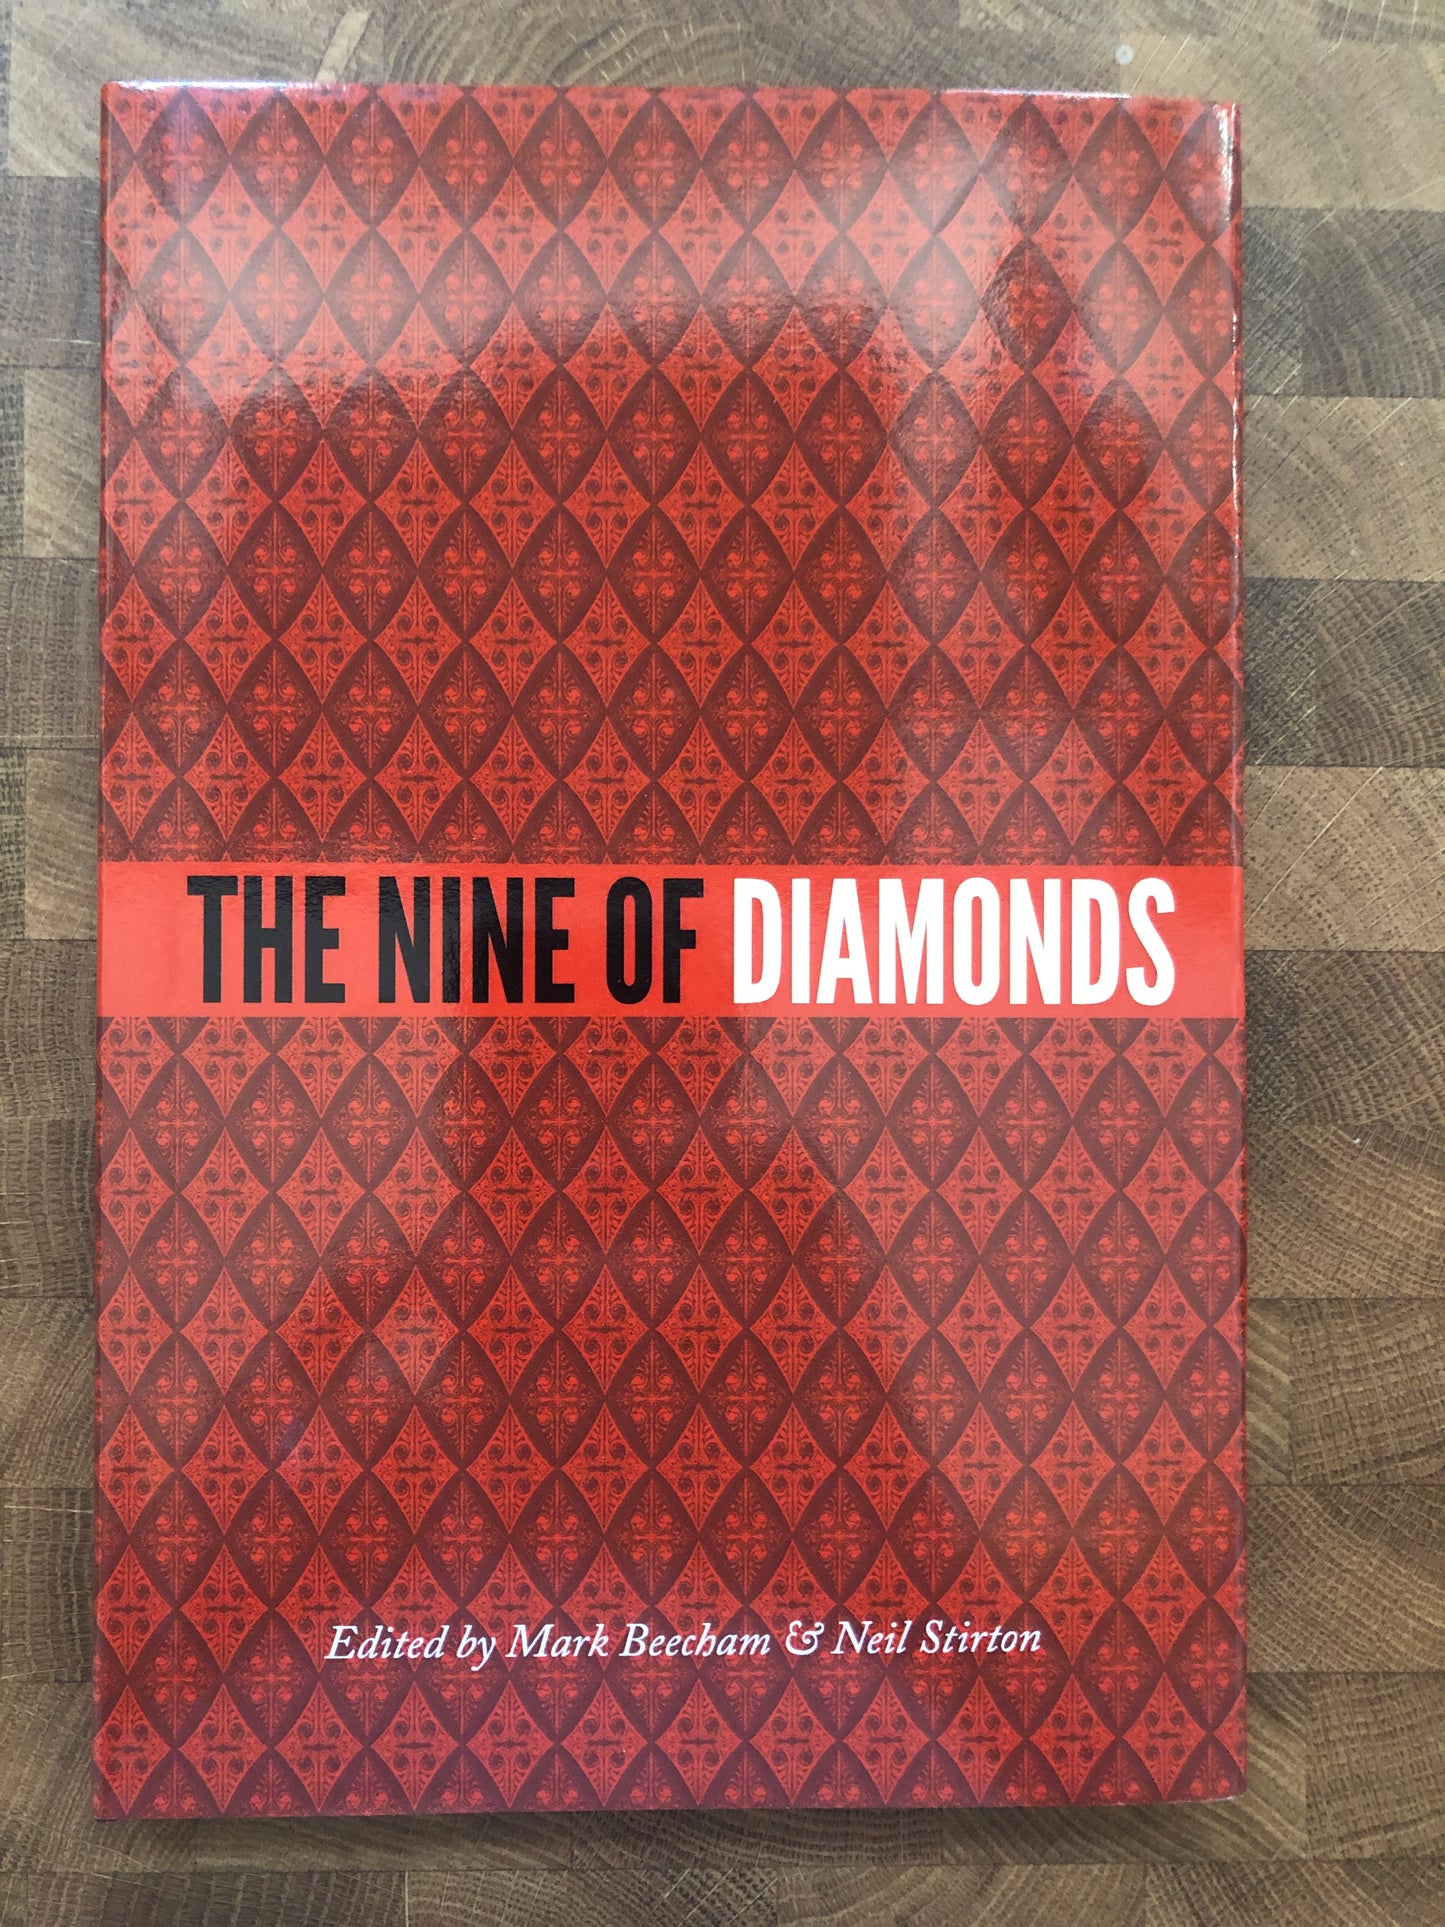 The Nine of Diamonds - Mark Beecham & Neil Stirton (New & Used copies)